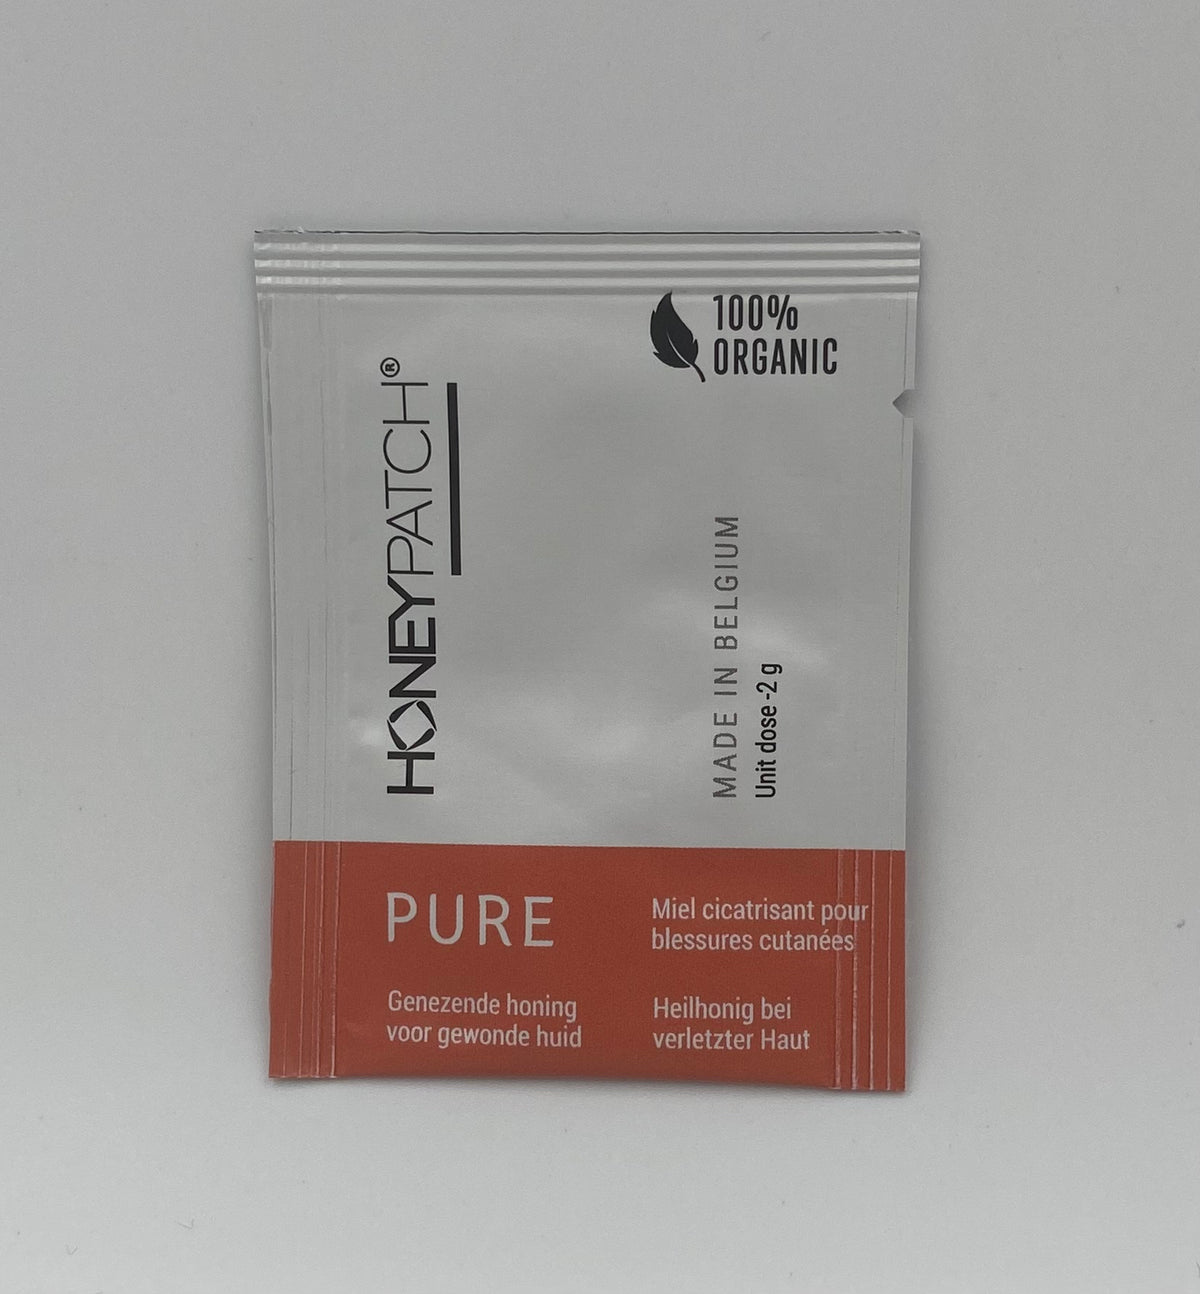 Unit dose of PURE (2 ml) Medical honey